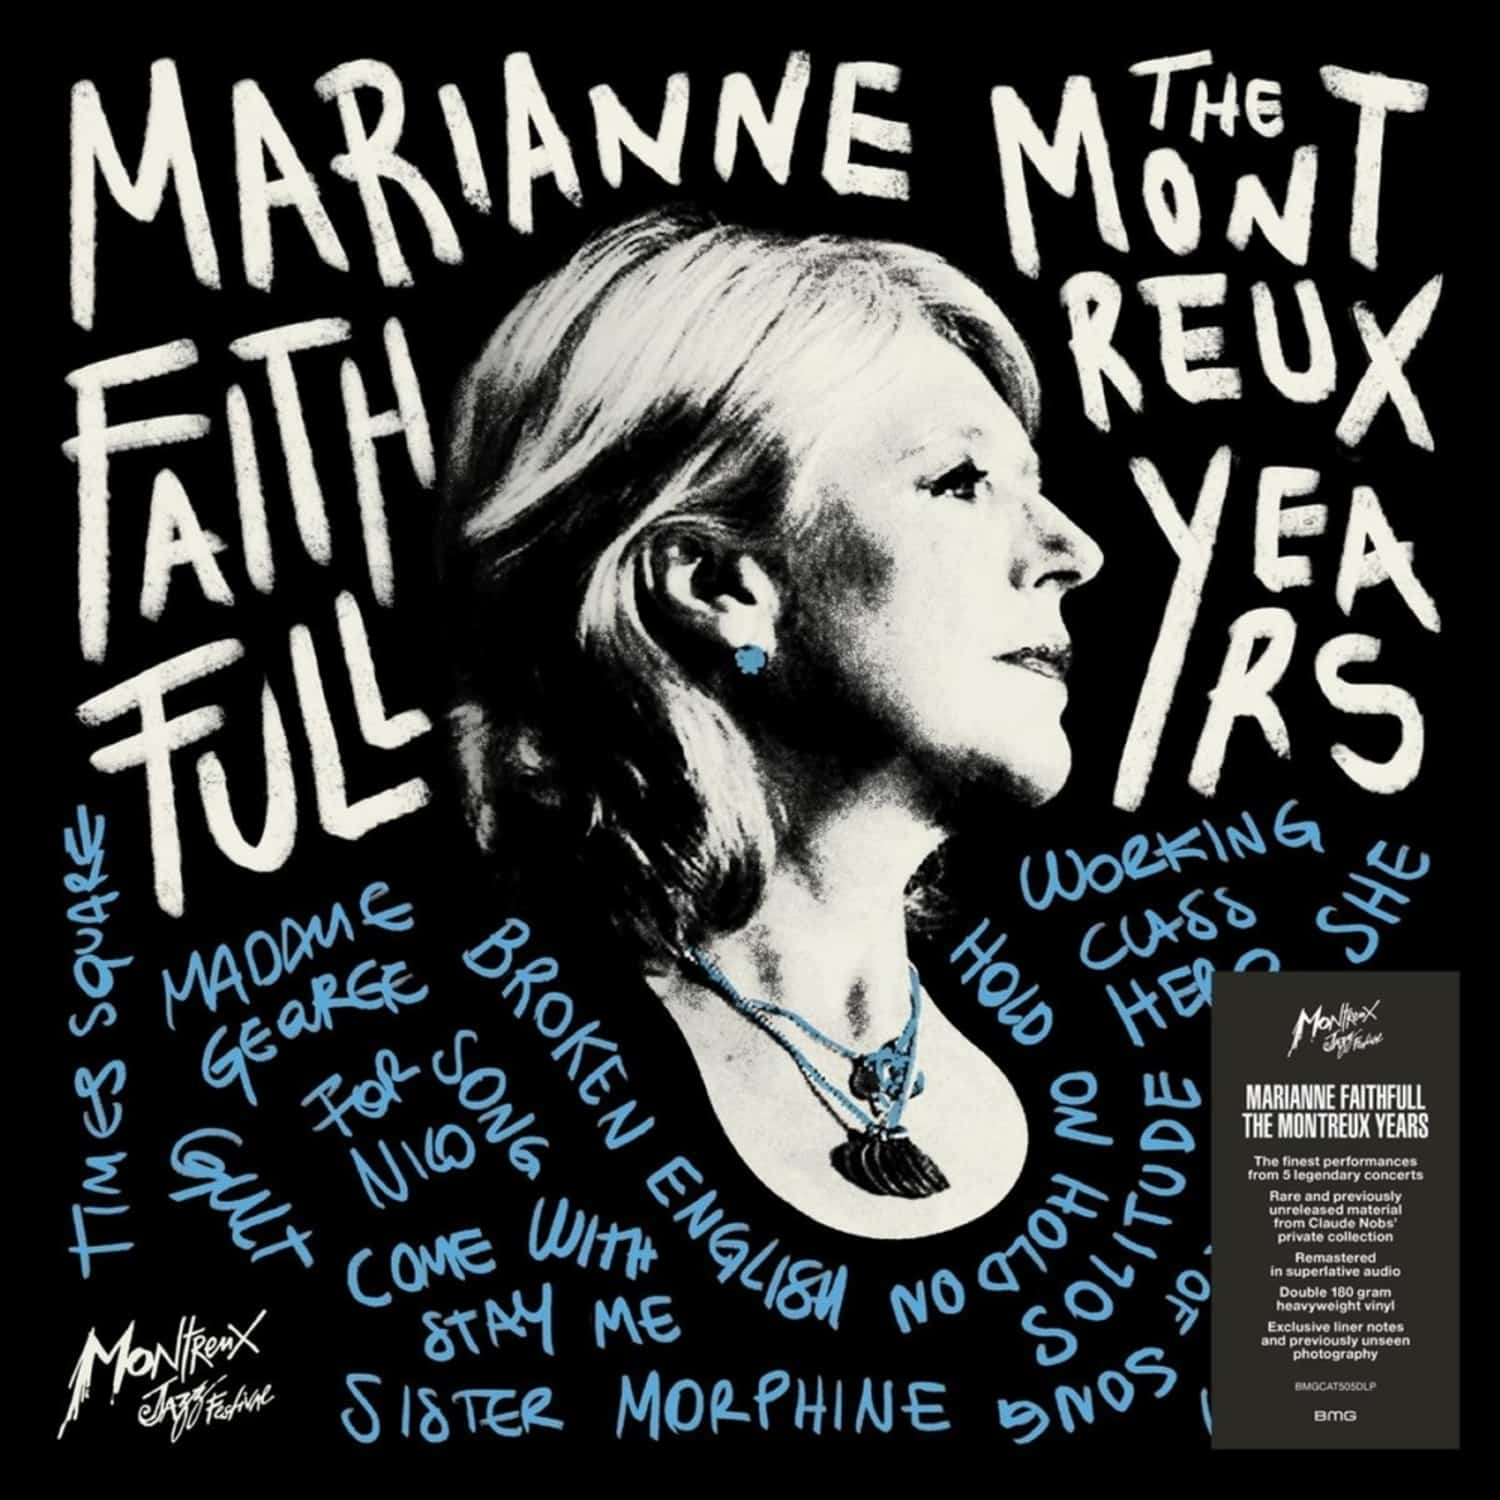 Marianne Faithfull - MARIANNE FAITHFULL:THE MONTREUX YEARS 